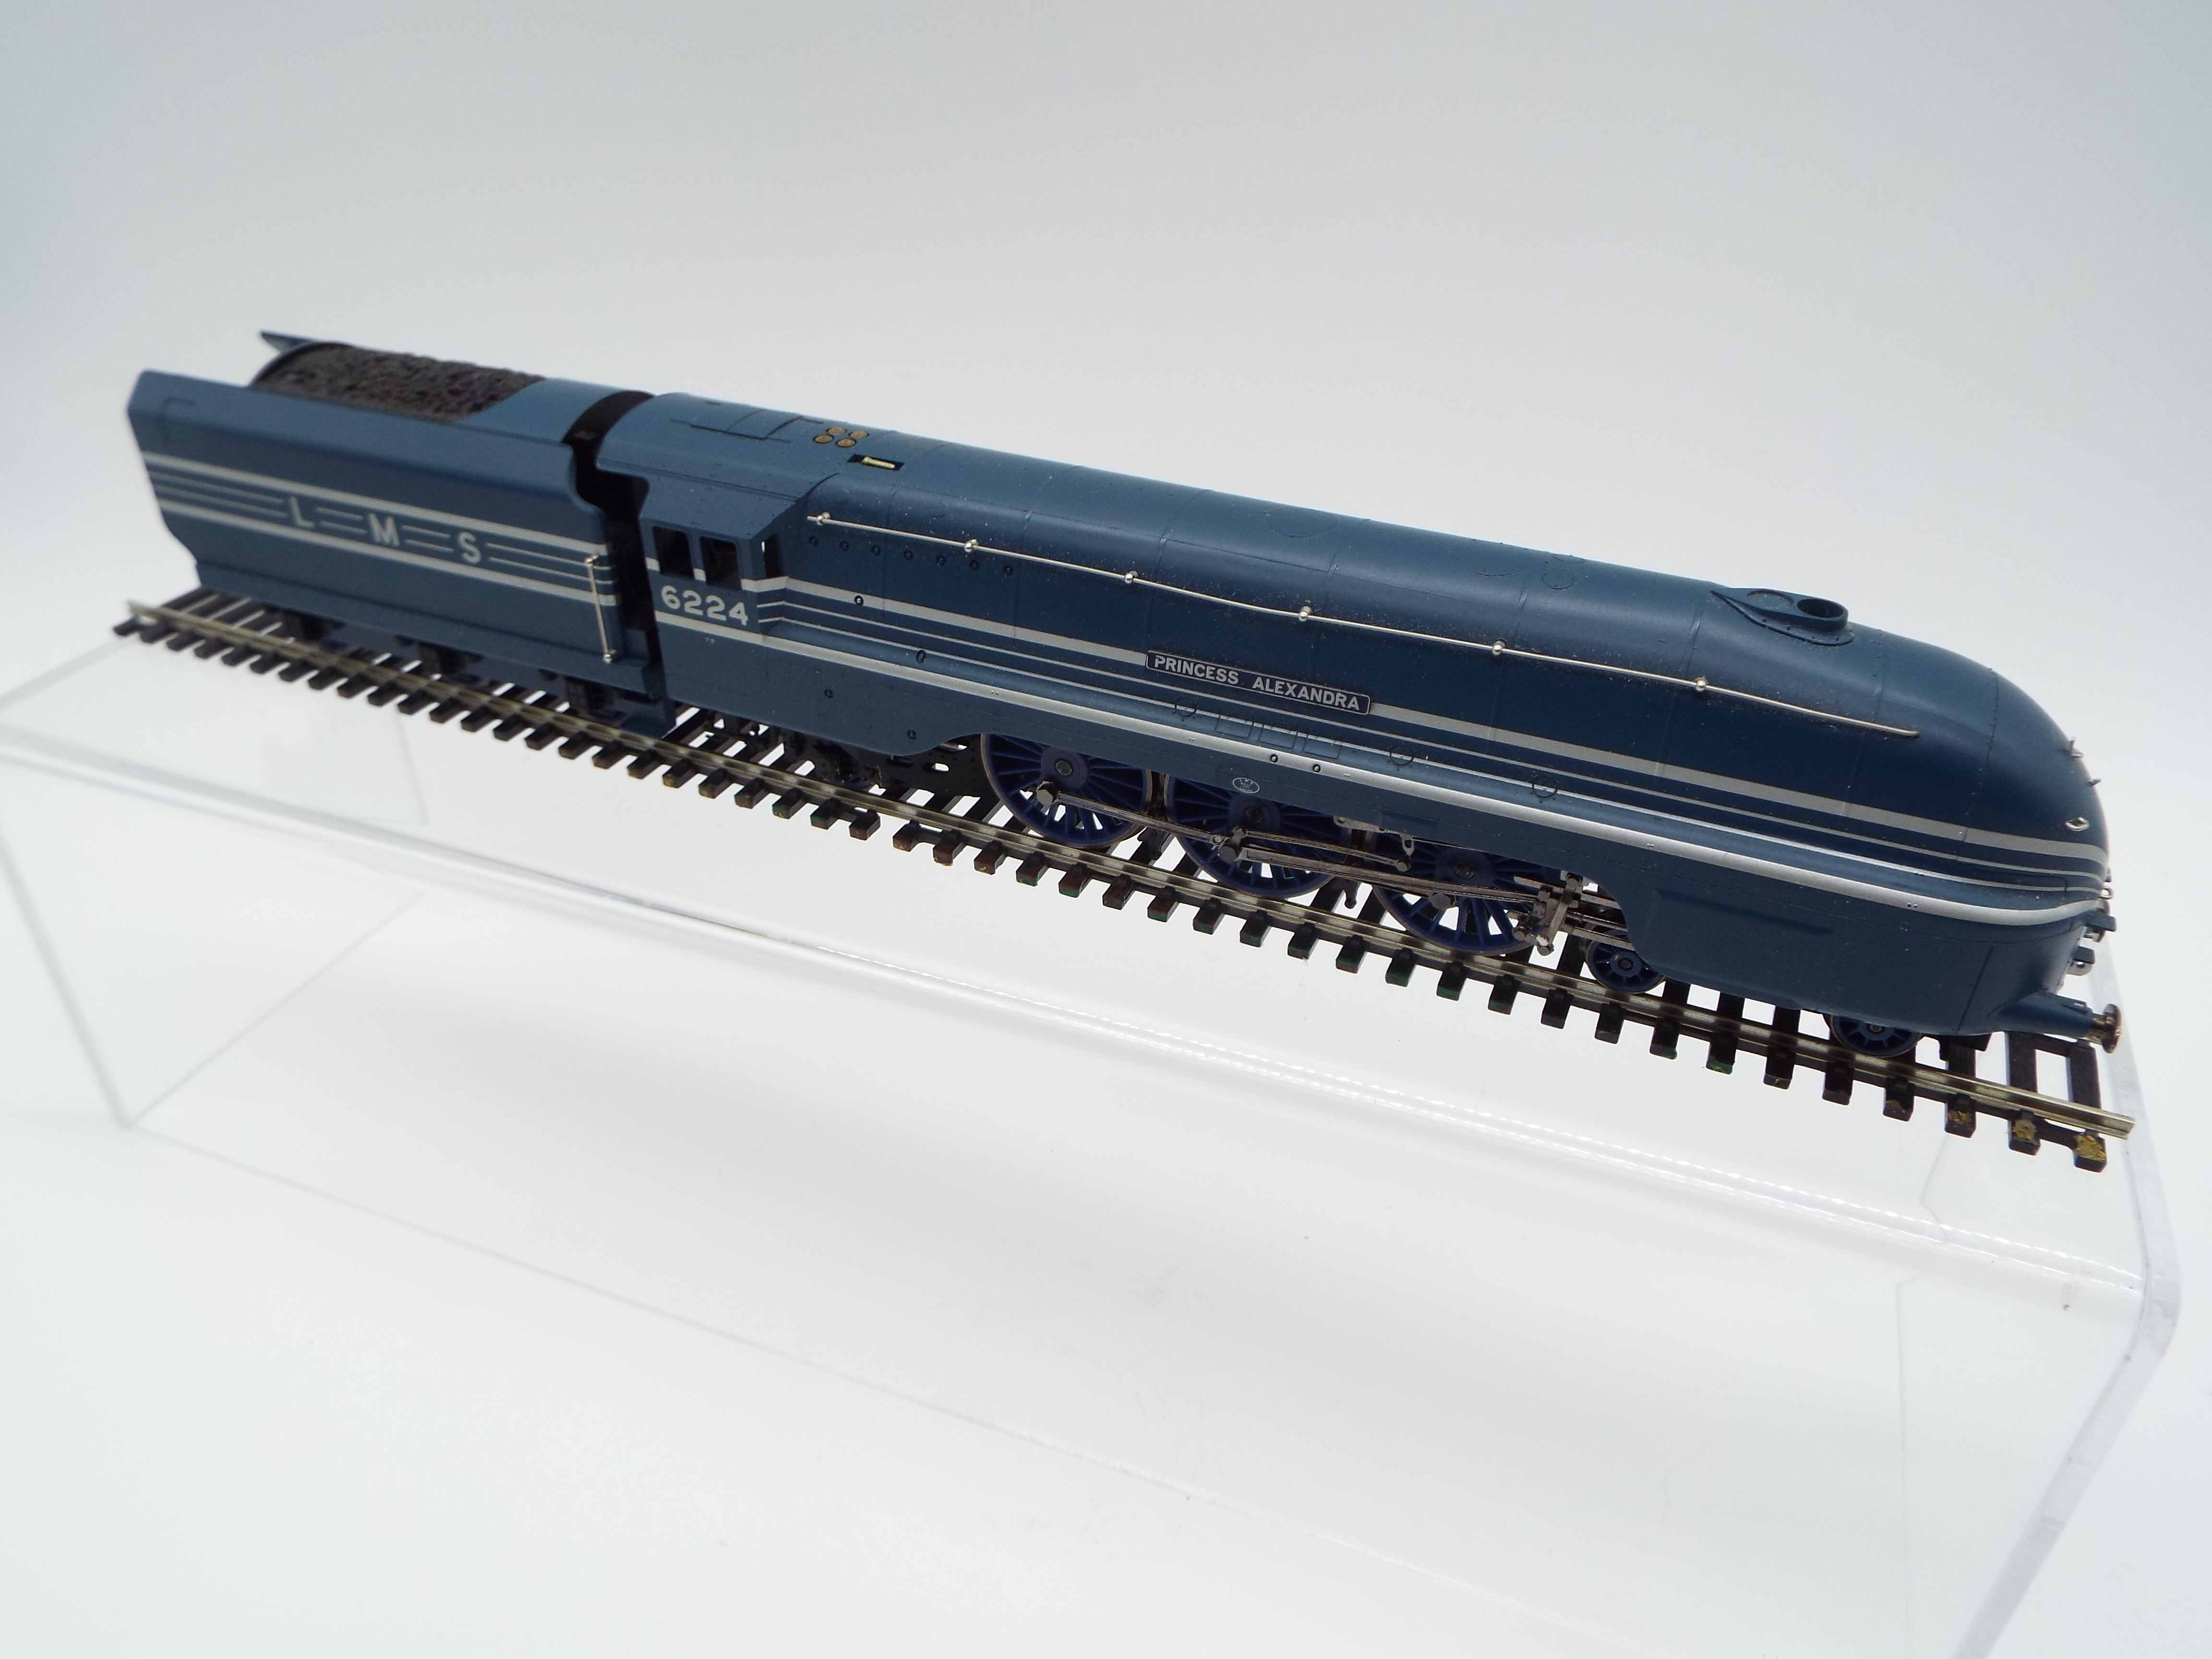 Hornby - an OO gauge model 4-6-2 locomotive and tender 'Princess Alexandra' running no 6224,